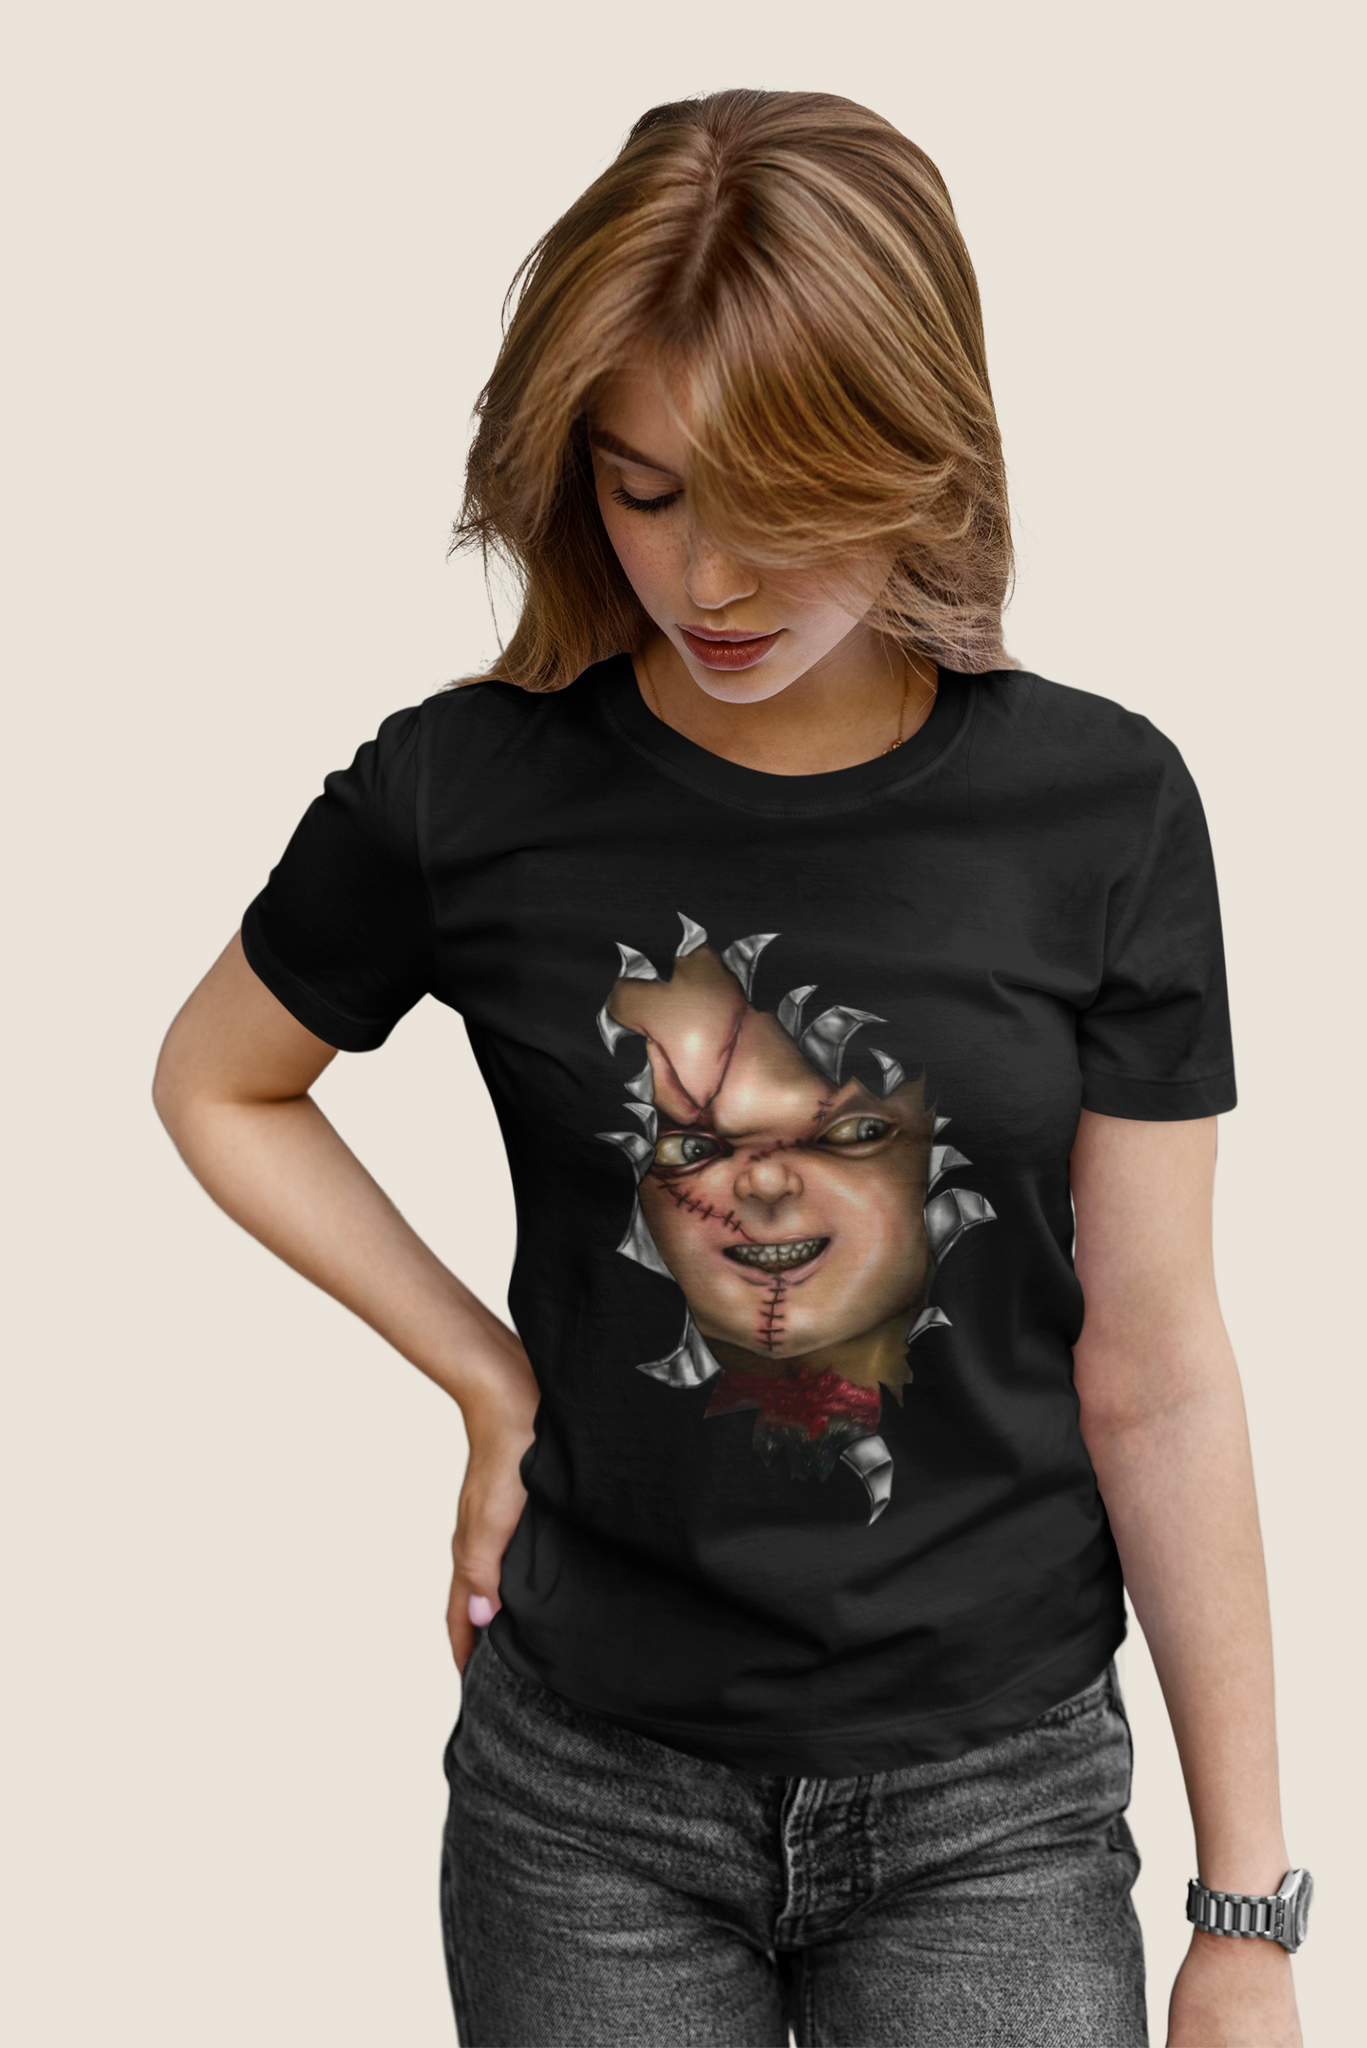 Chucky T Shirt, Halloween Scary T Shirt, Horror Character Tshirt, Halloween Gifts